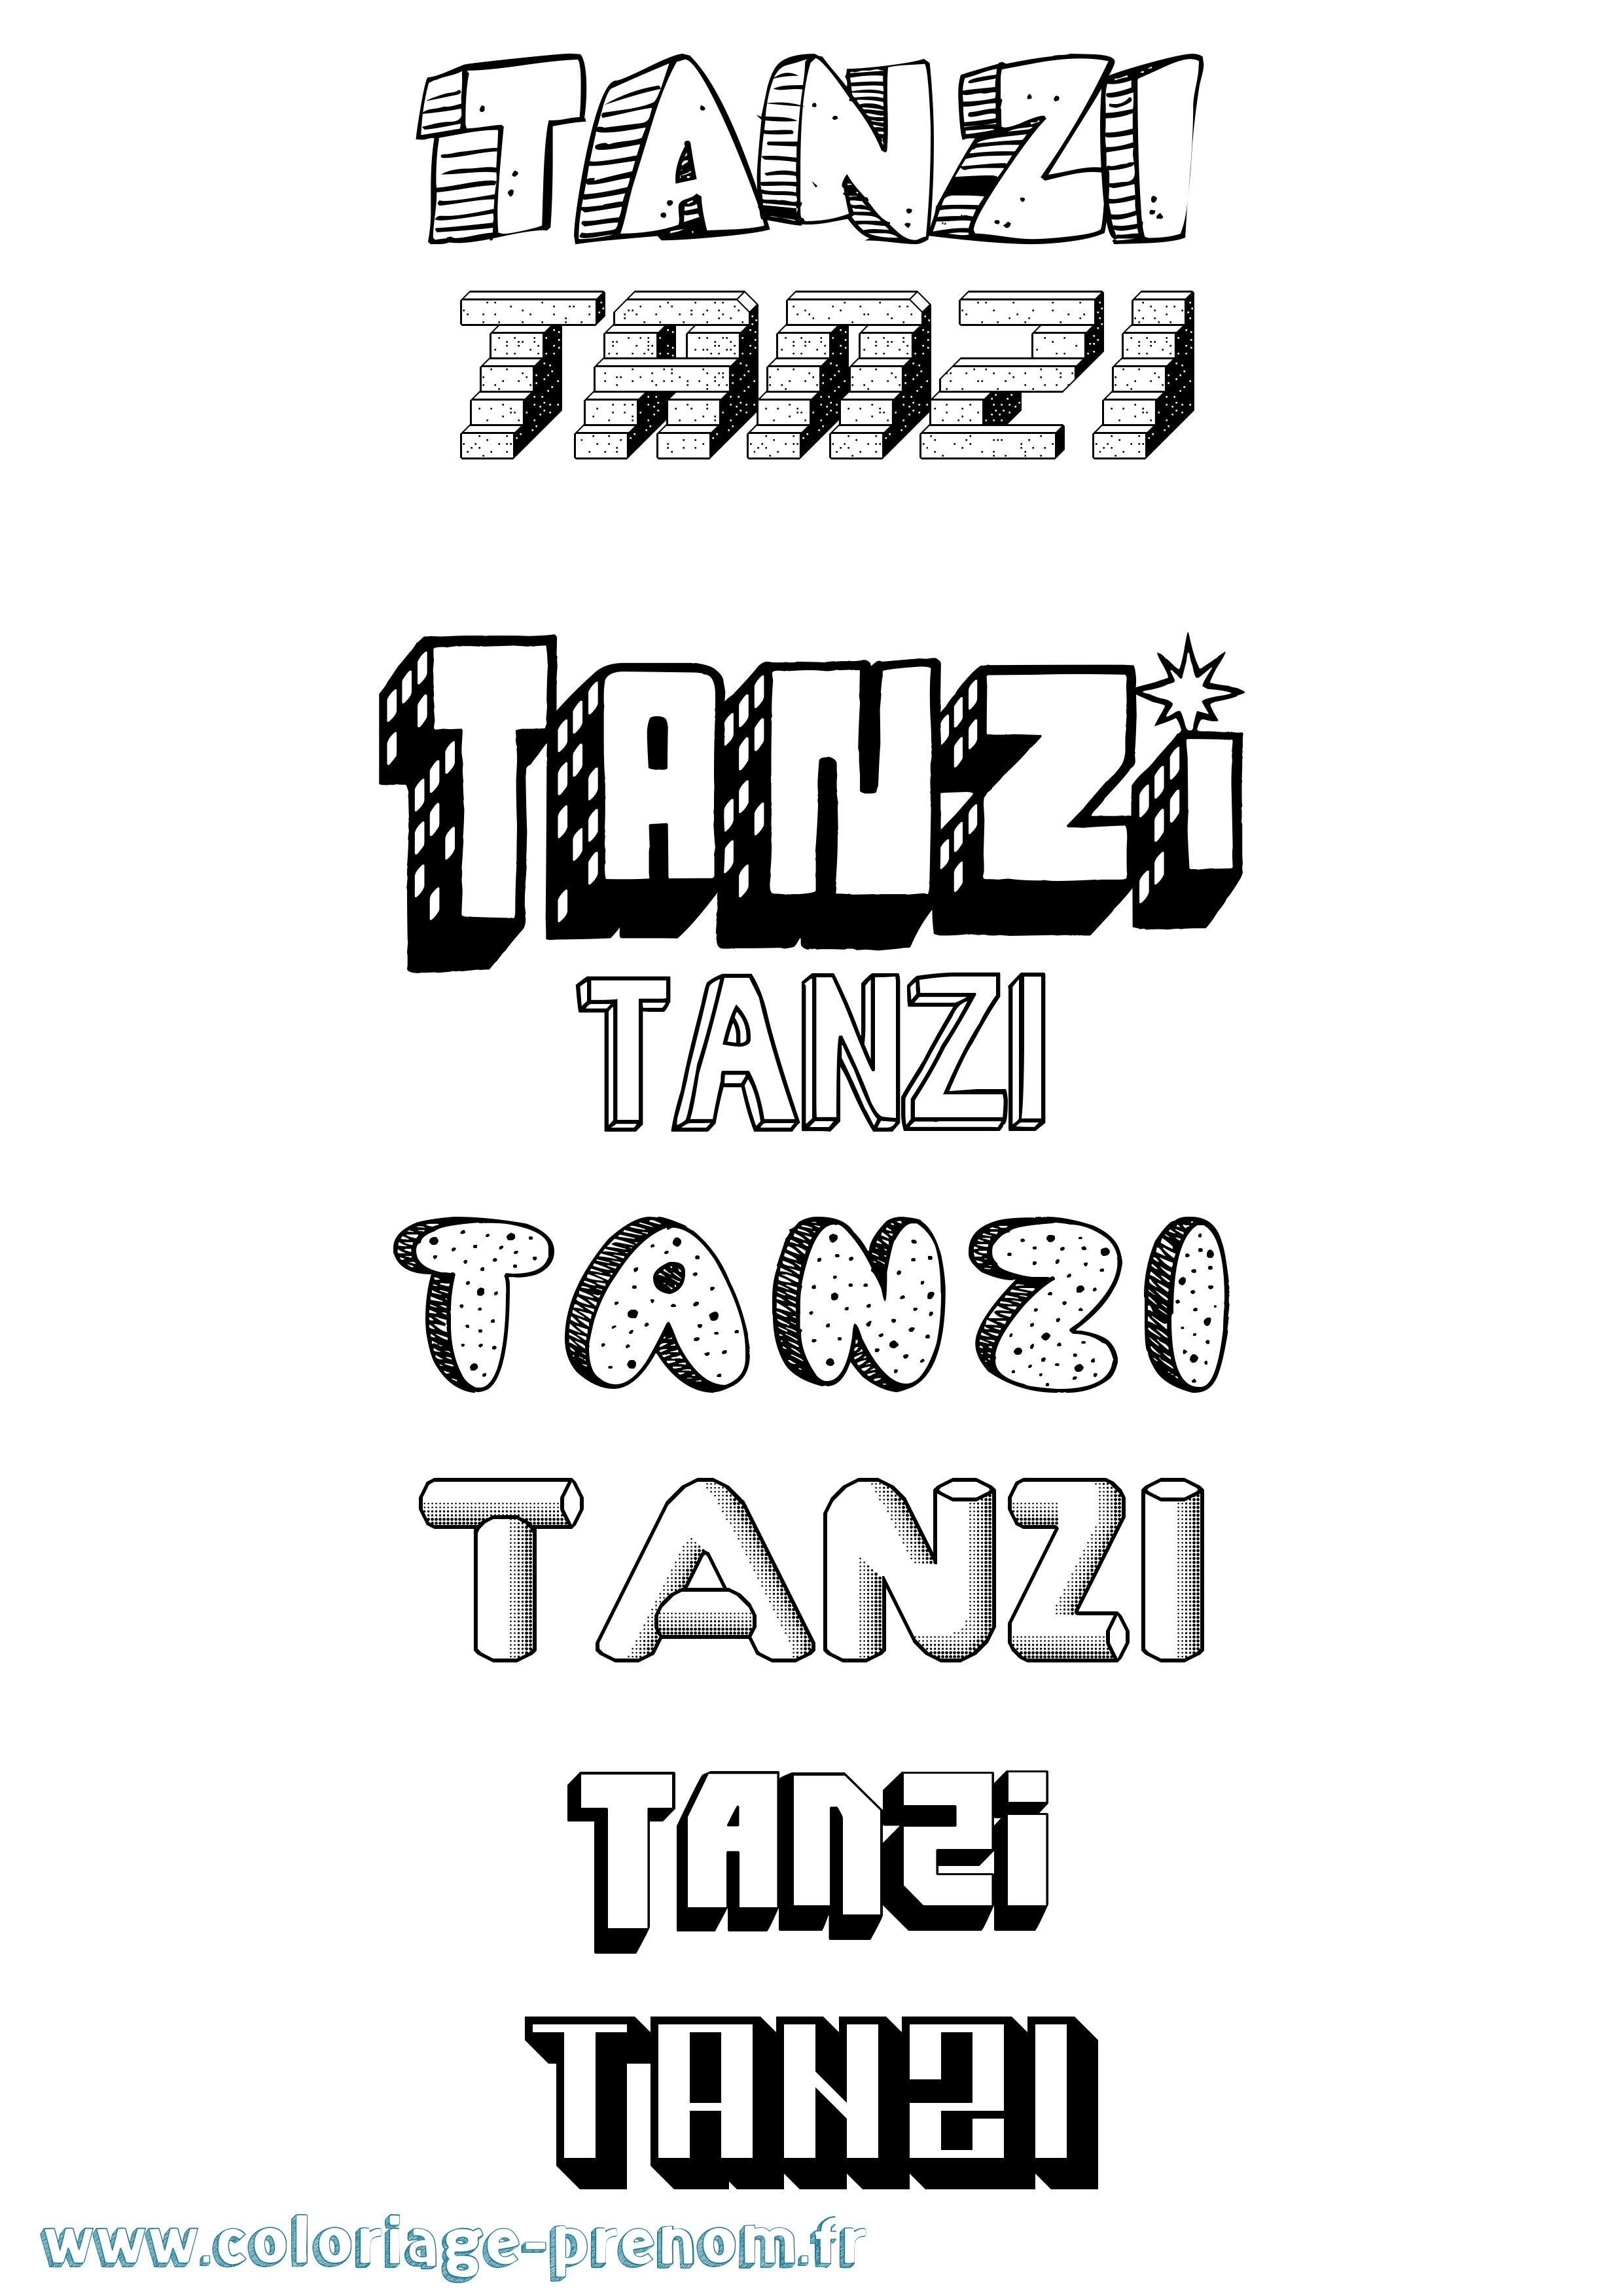 Coloriage prénom Tanzi Effet 3D